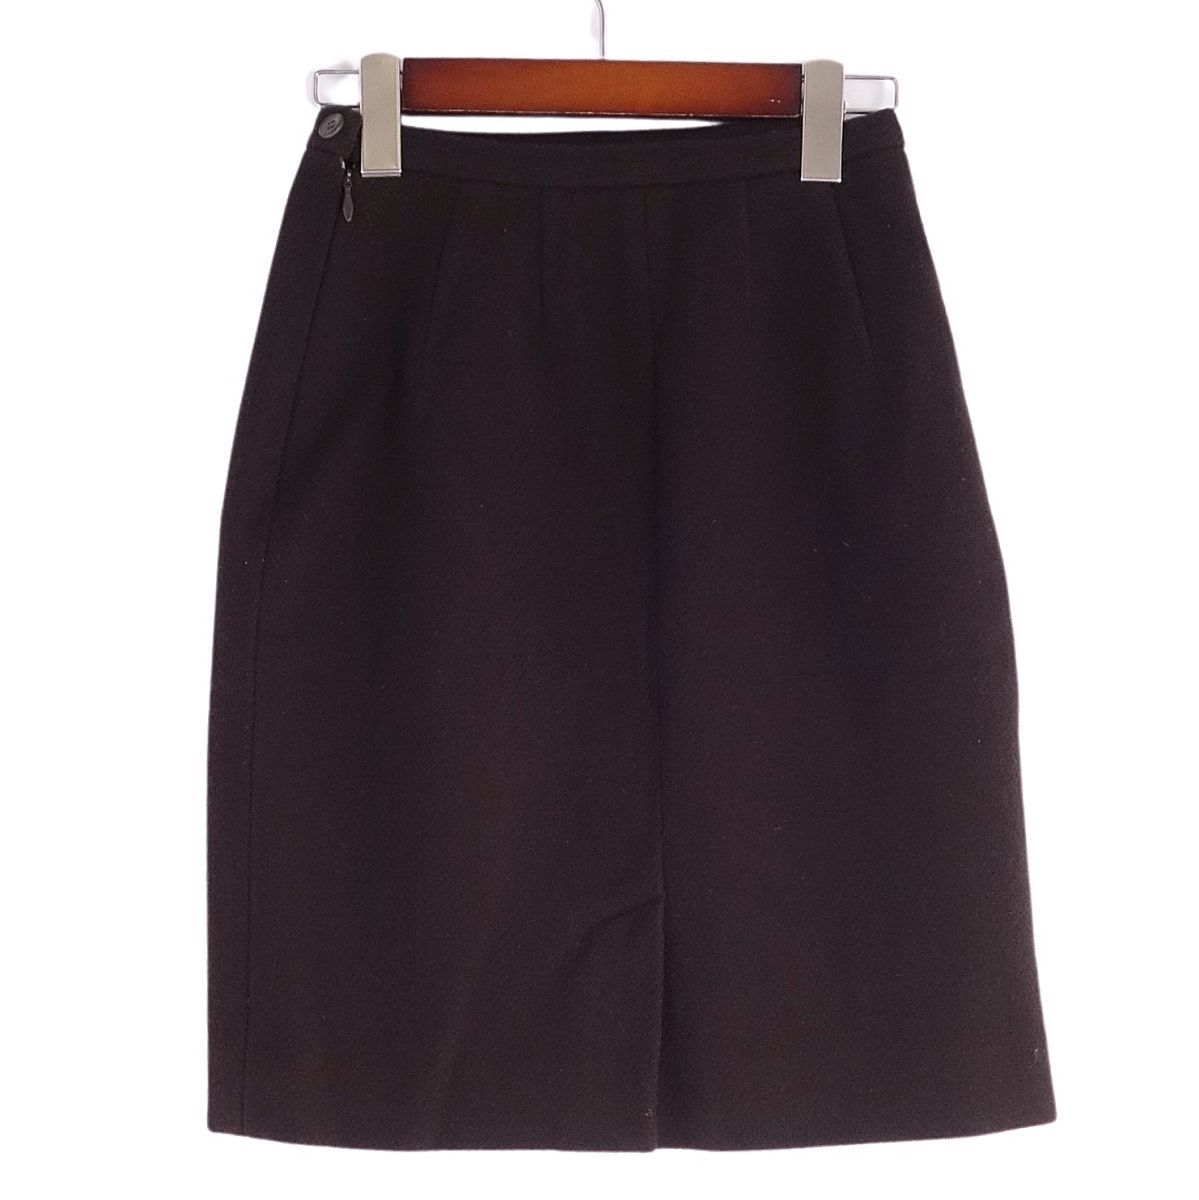  beautiful goods Prada PRADA skirt tight skirt short plain wool cashmere bottoms lady's 40 black cg06ml-rm11f04181